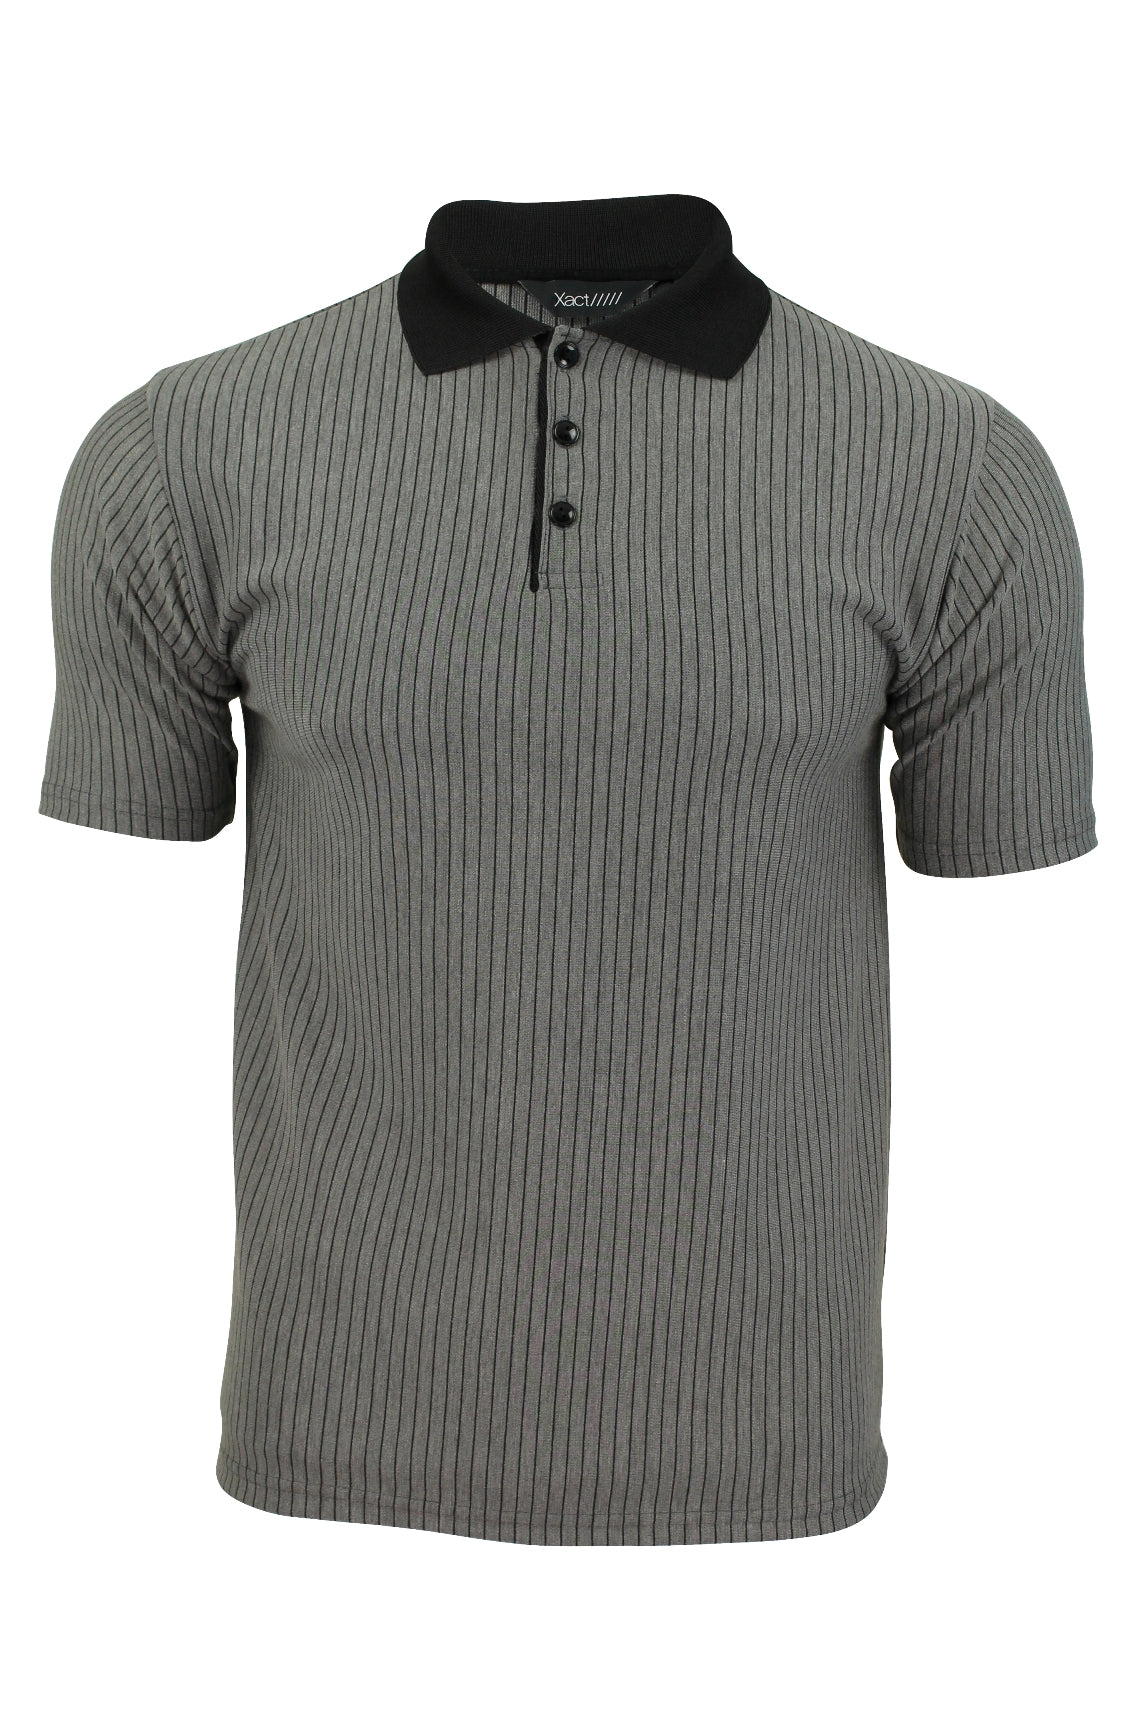 Mens Stripe Polo Shirt by Xact Clothing Short Sleeved-Main Image